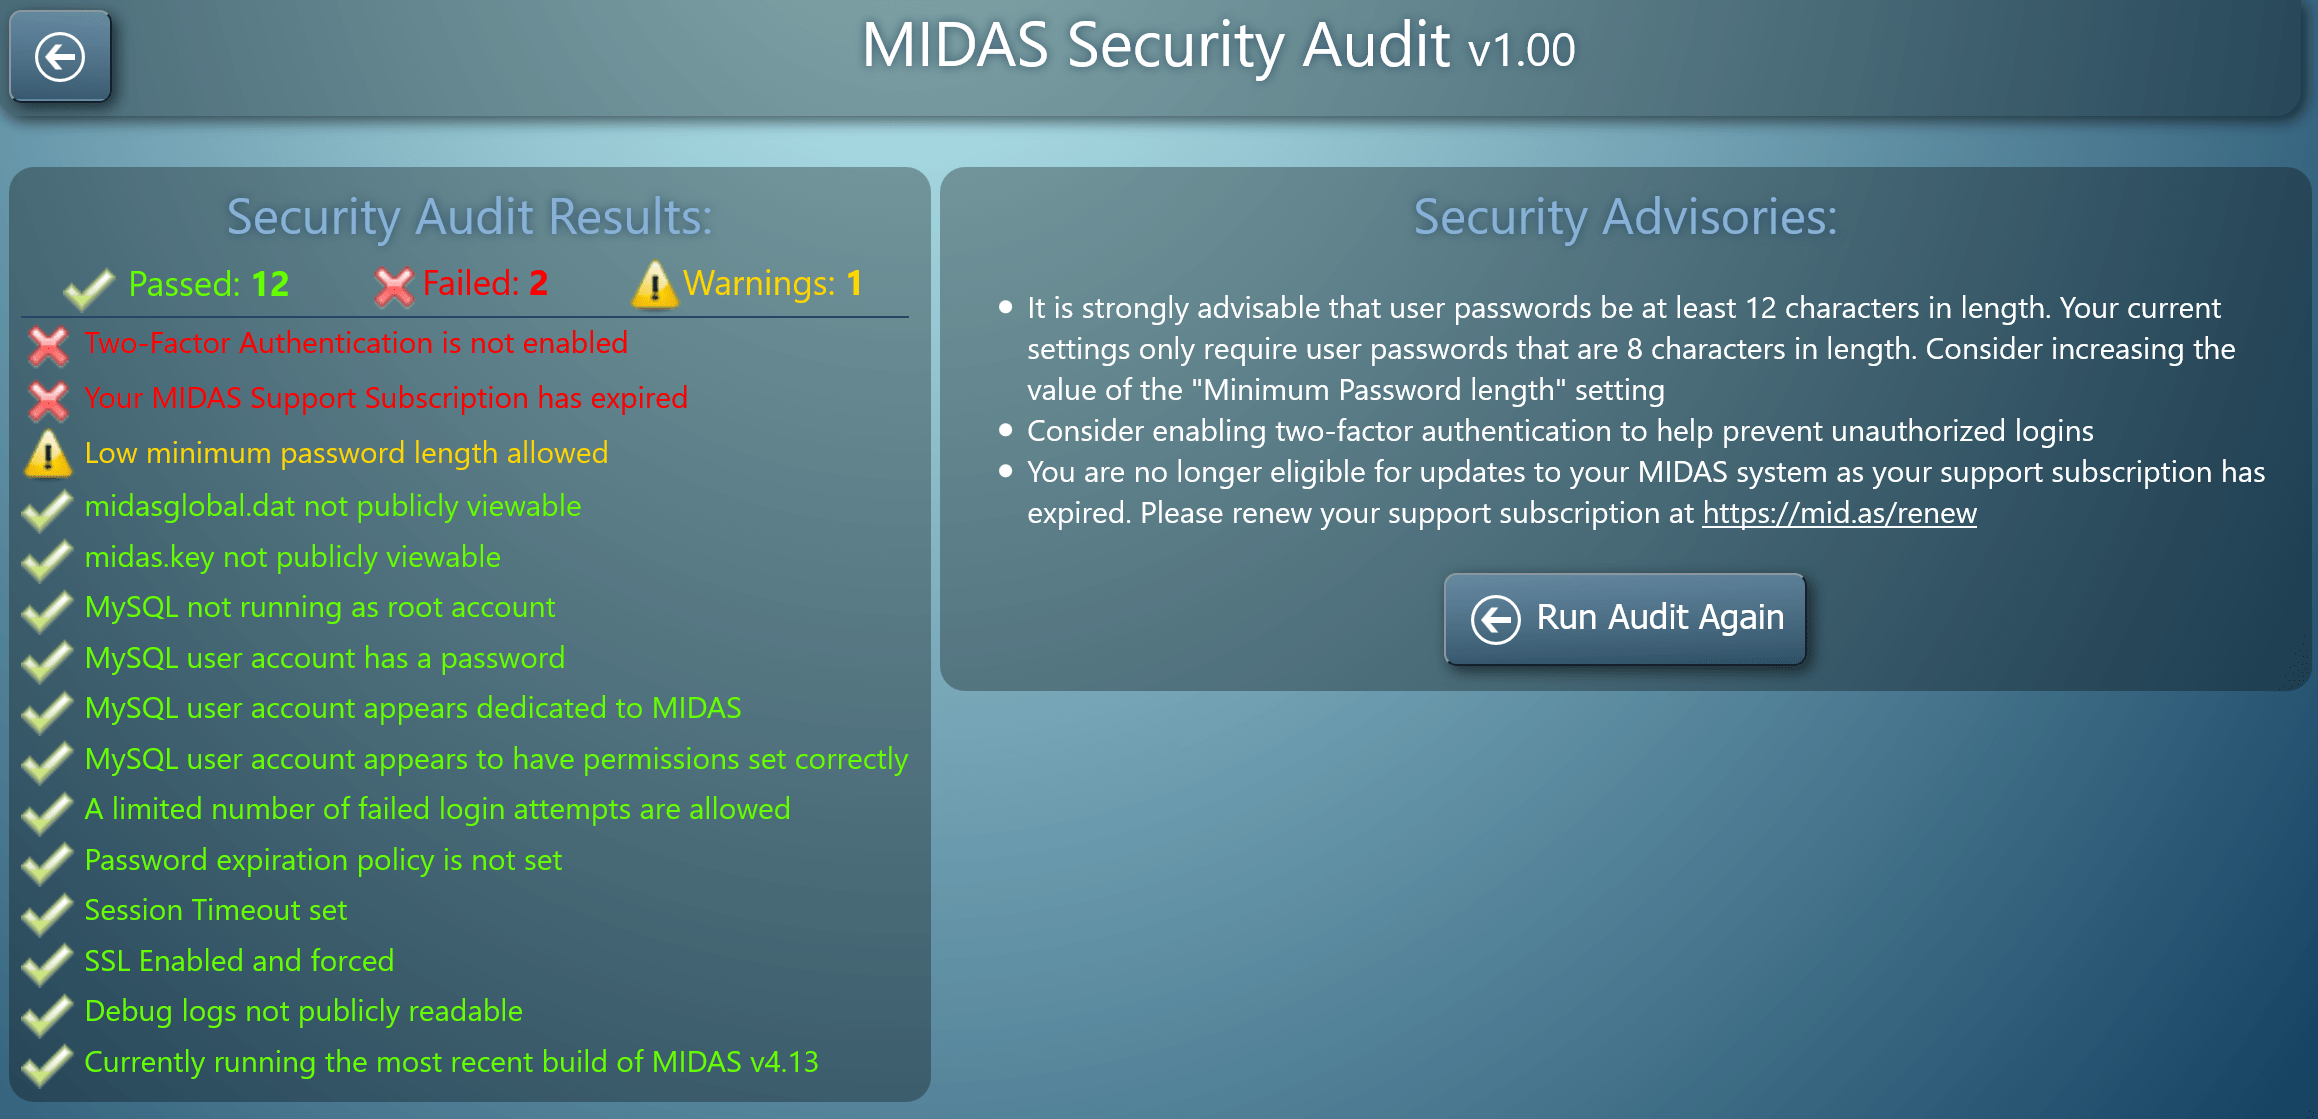 15-Point Security Audit